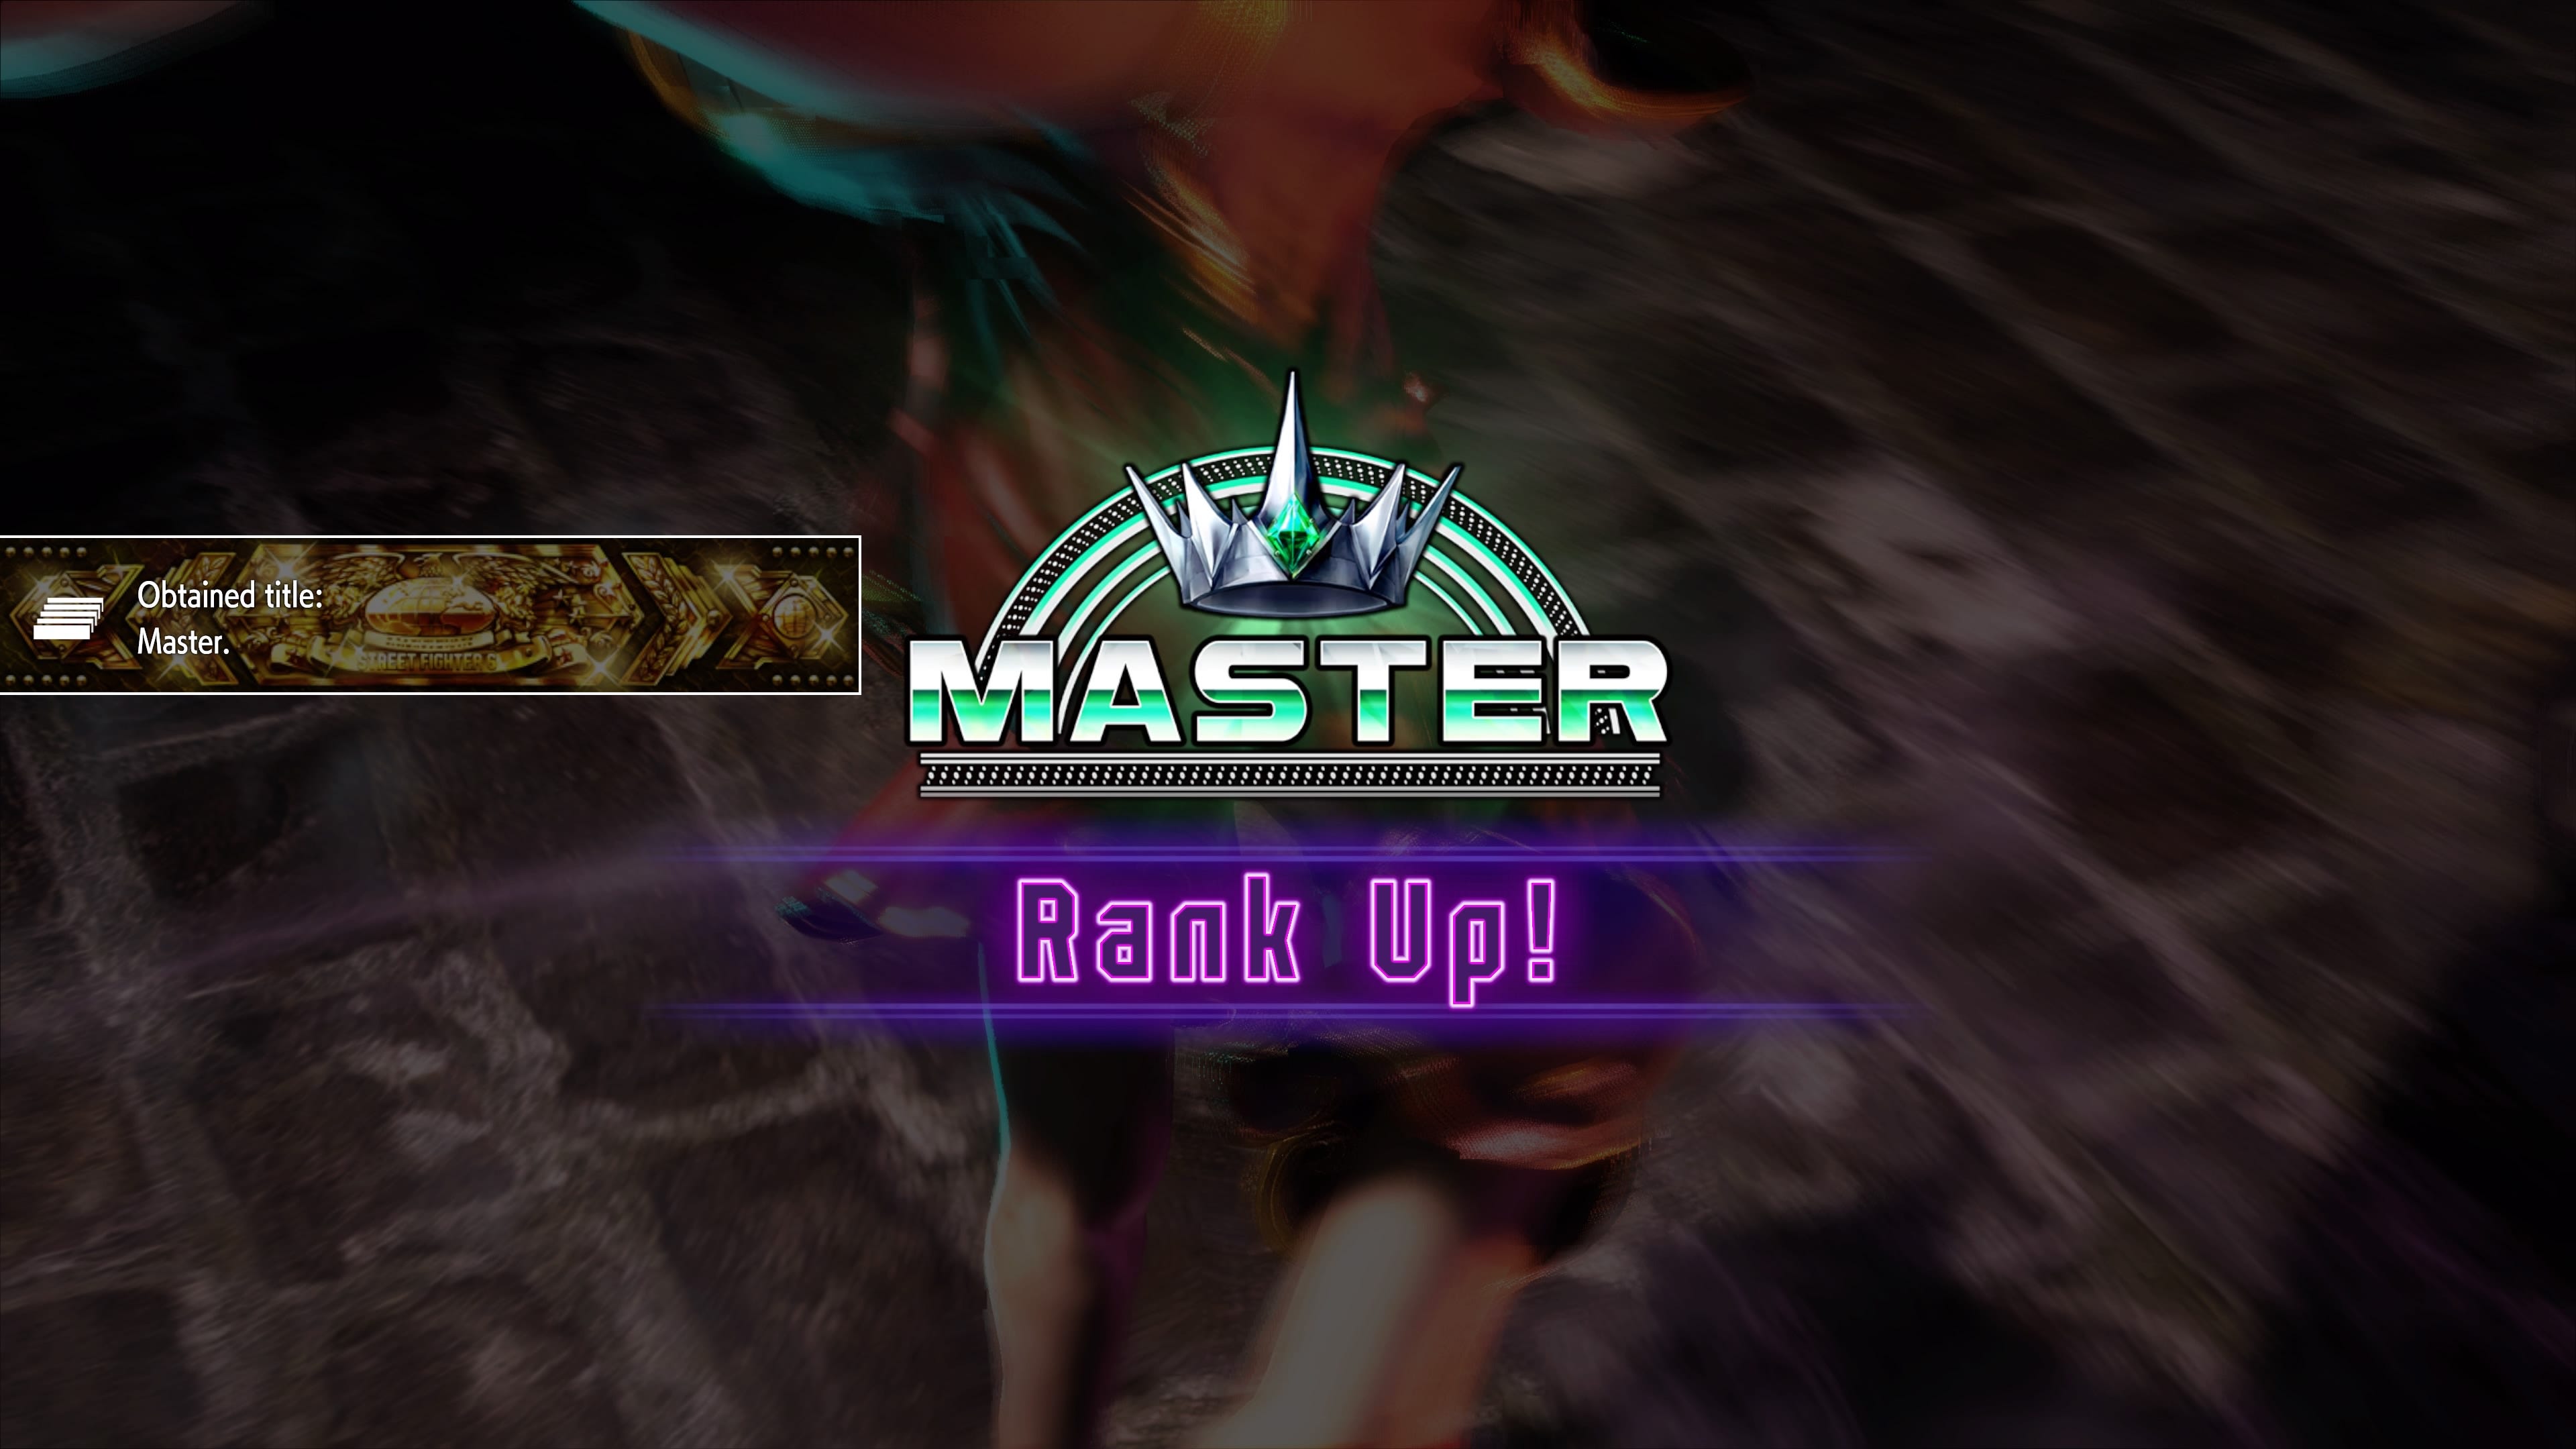 Bonus: I made Master rank in Street Fighter 6 with Chun-Li, so I'm